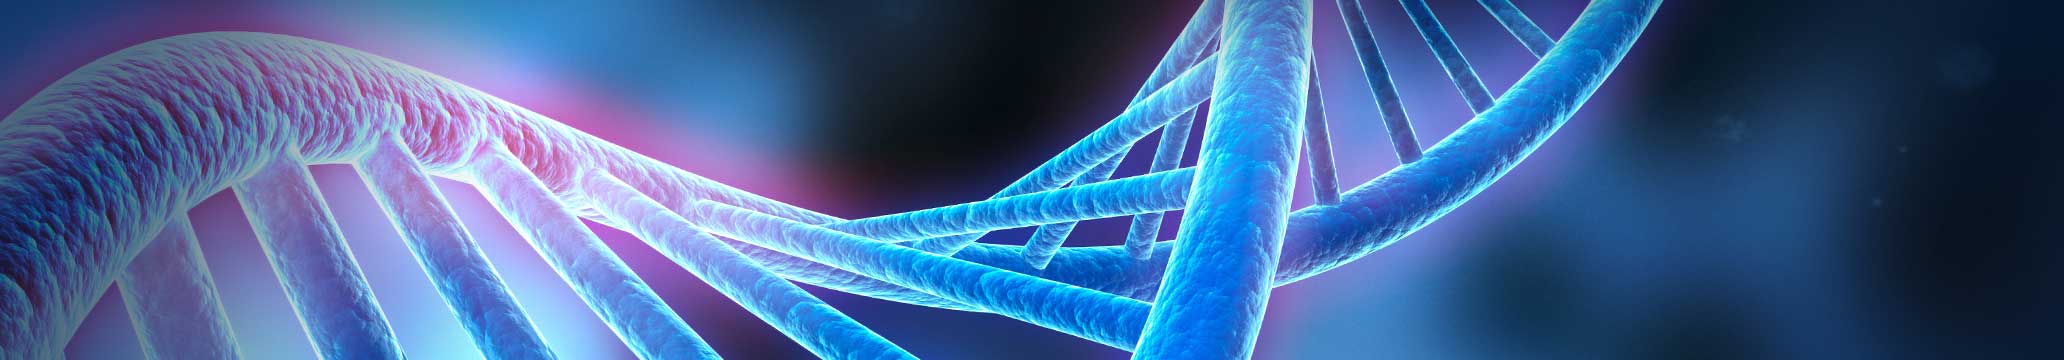 
DNA strand